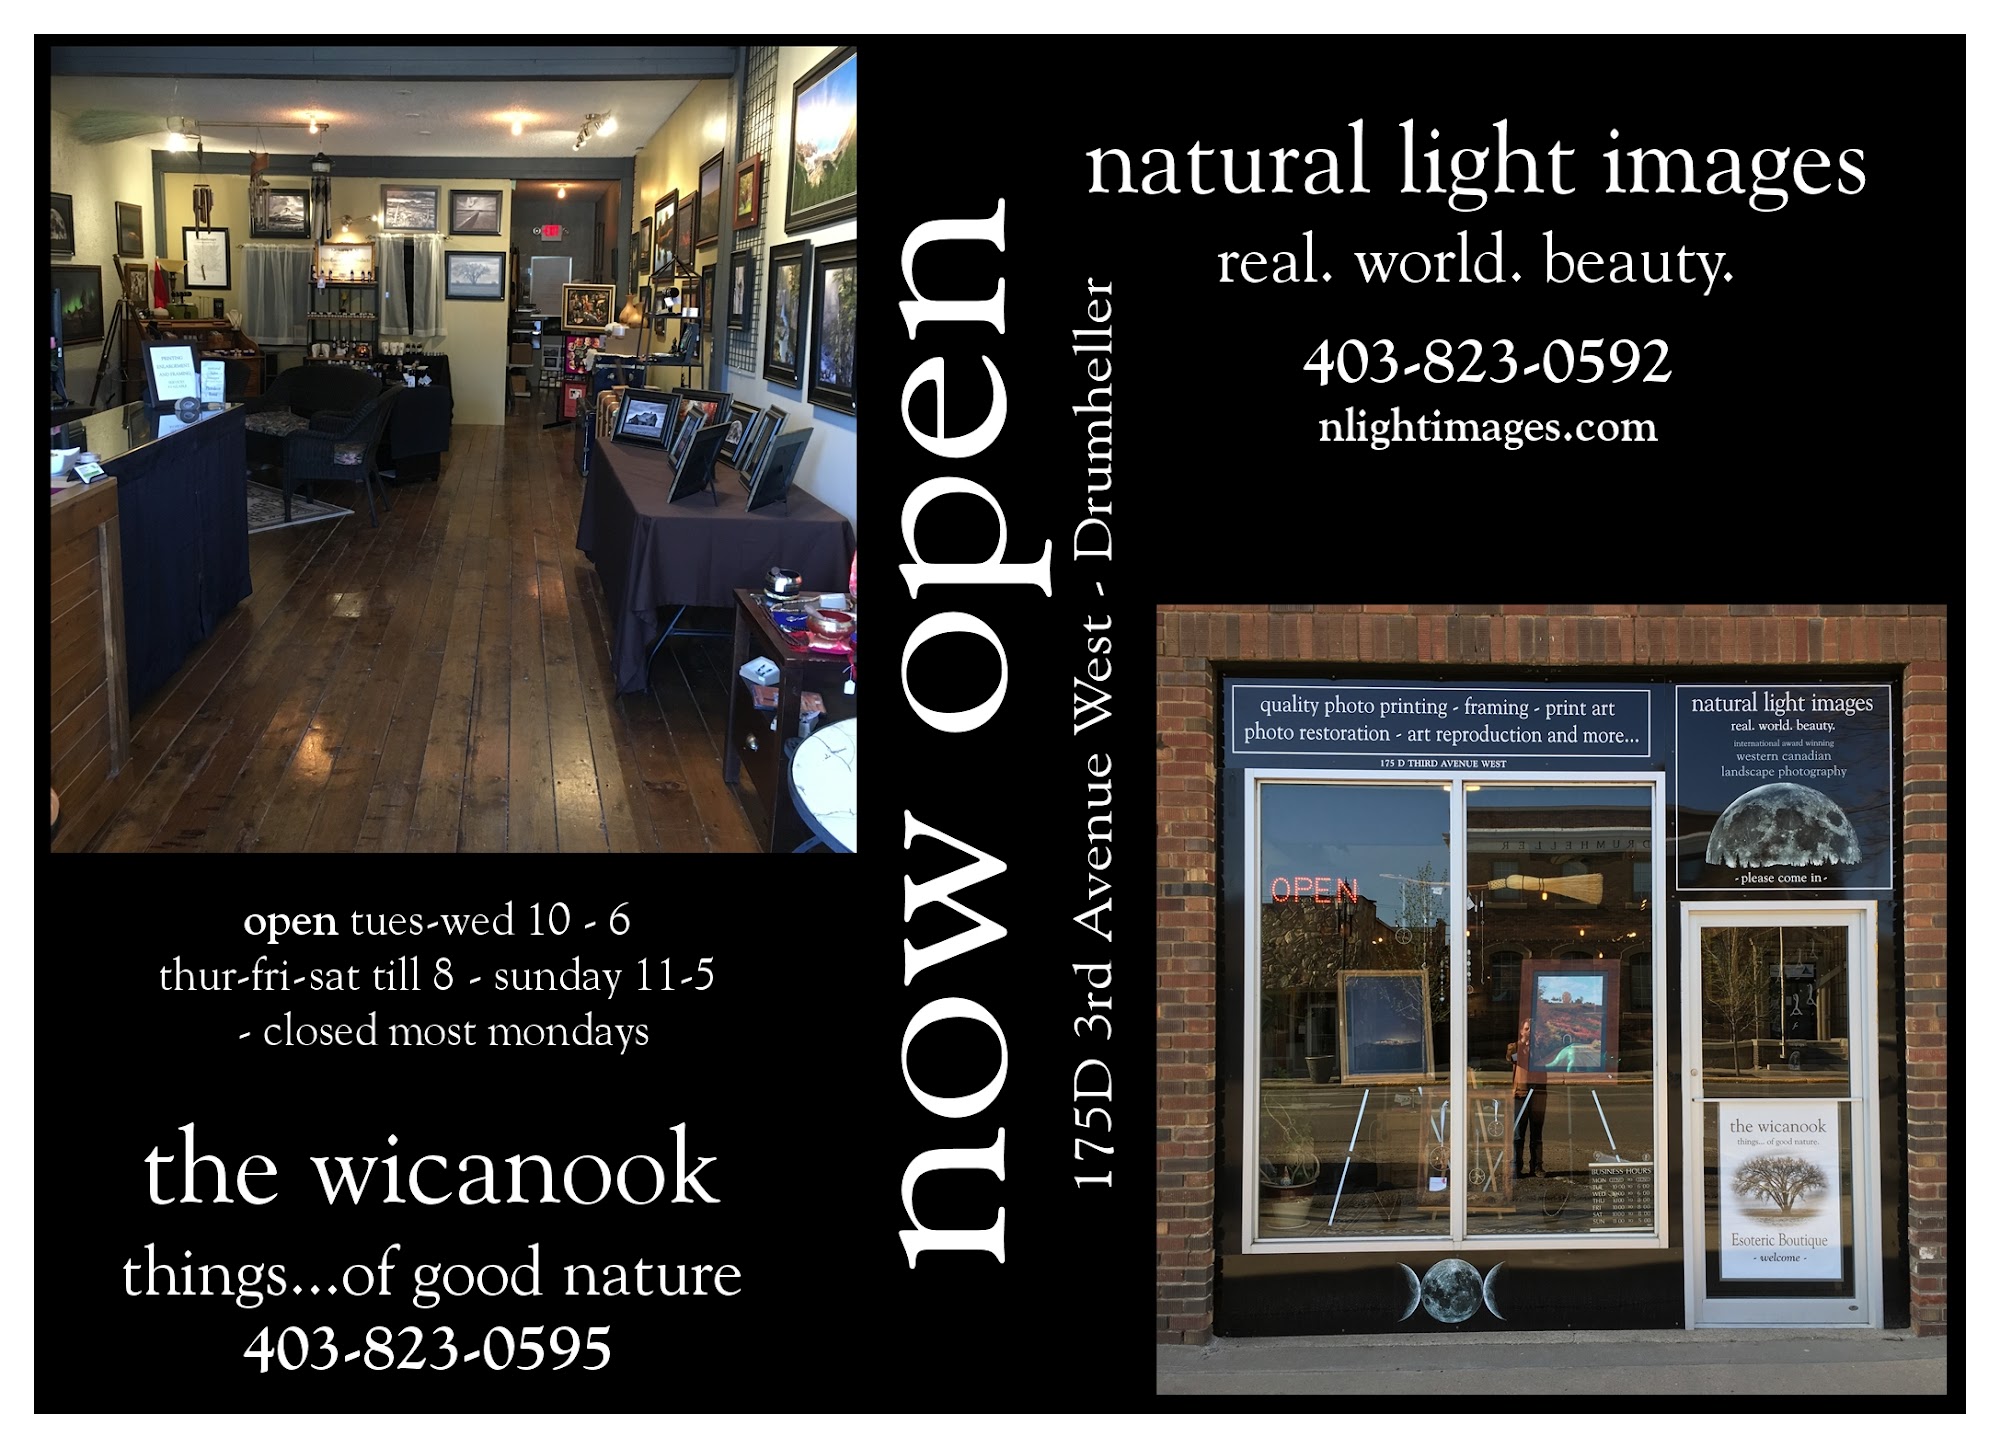 Natural Light Images - Tea...Indeed 175D 3 Ave W, Drumheller Alberta T0J 0Y0